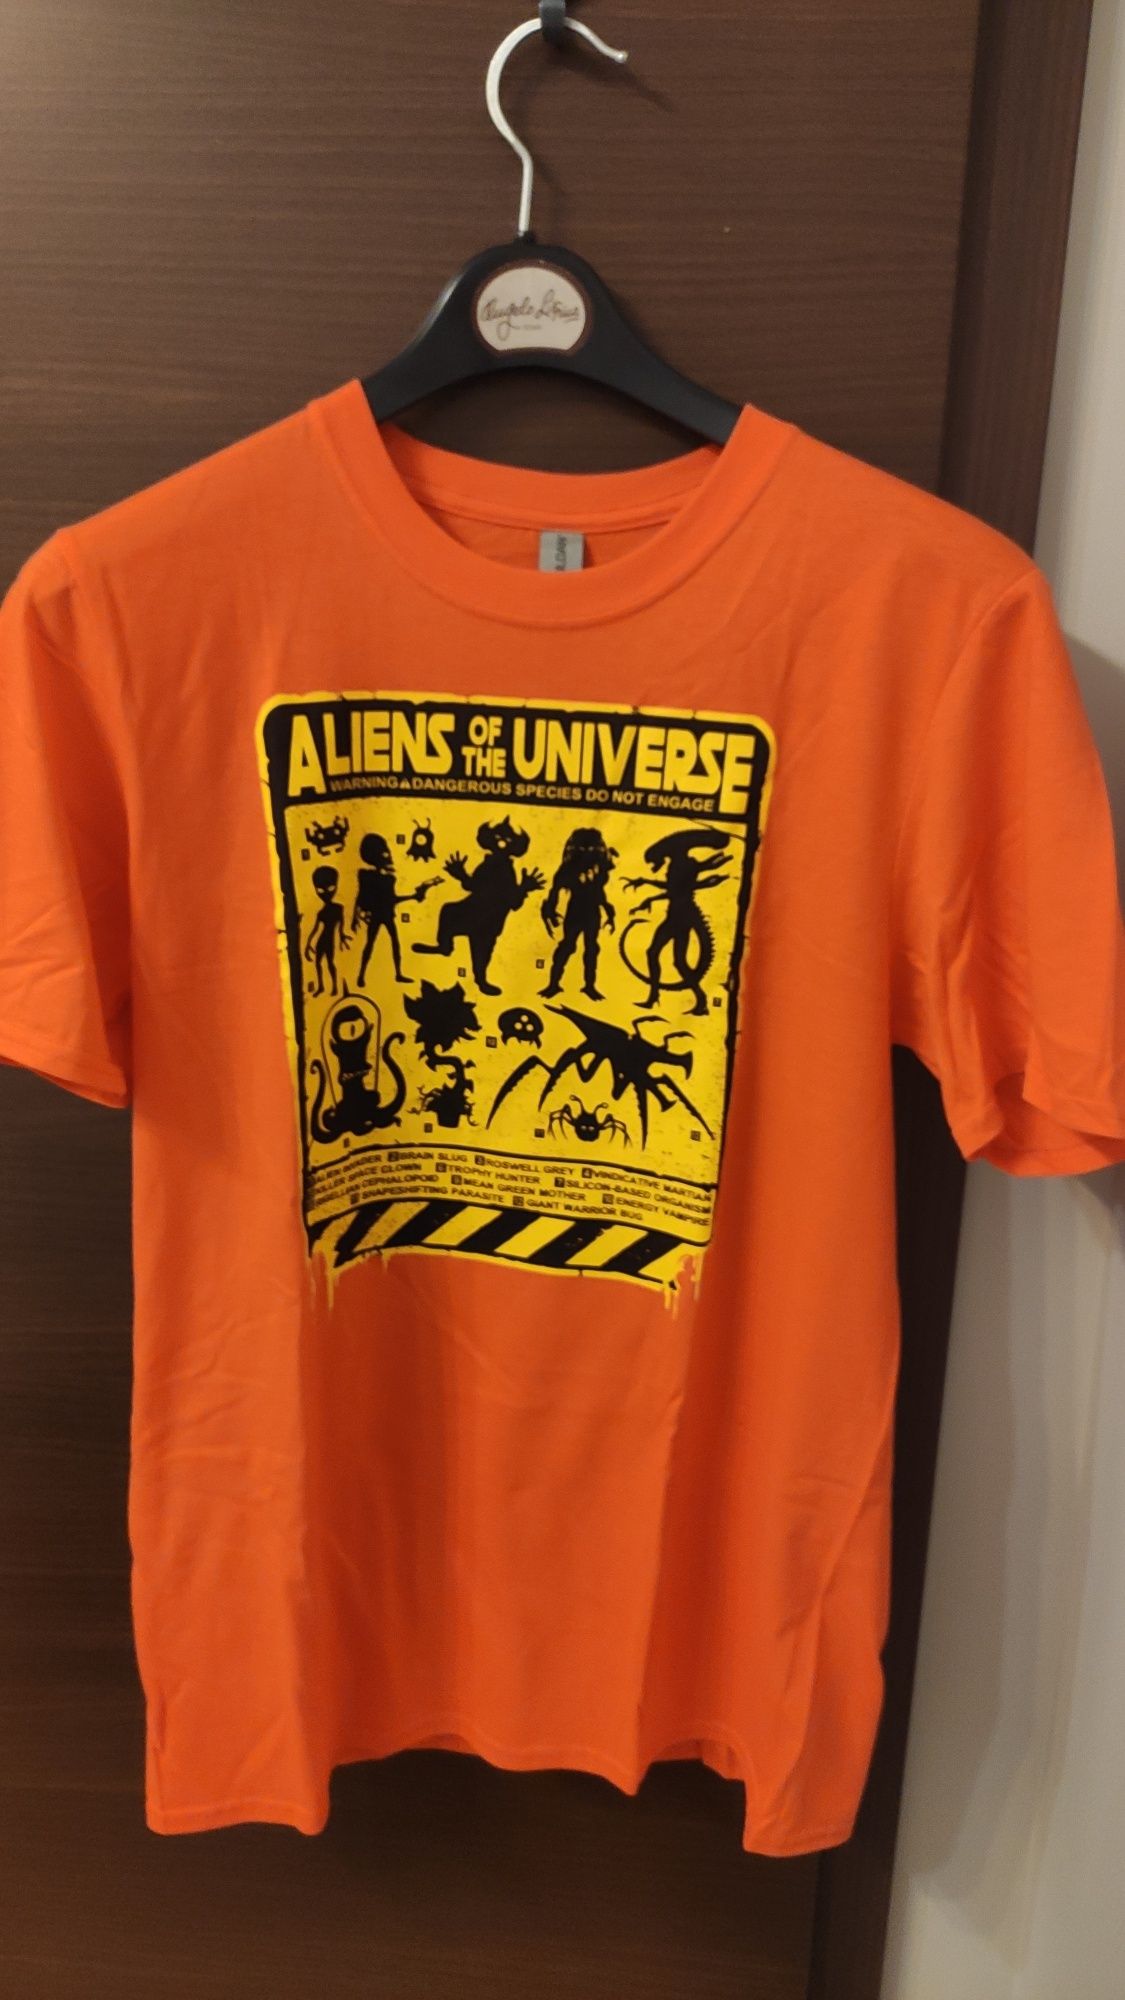 Nowa Koszulka "Aliens Of The Universe" ze sklepu Qwertee, rozmiar M